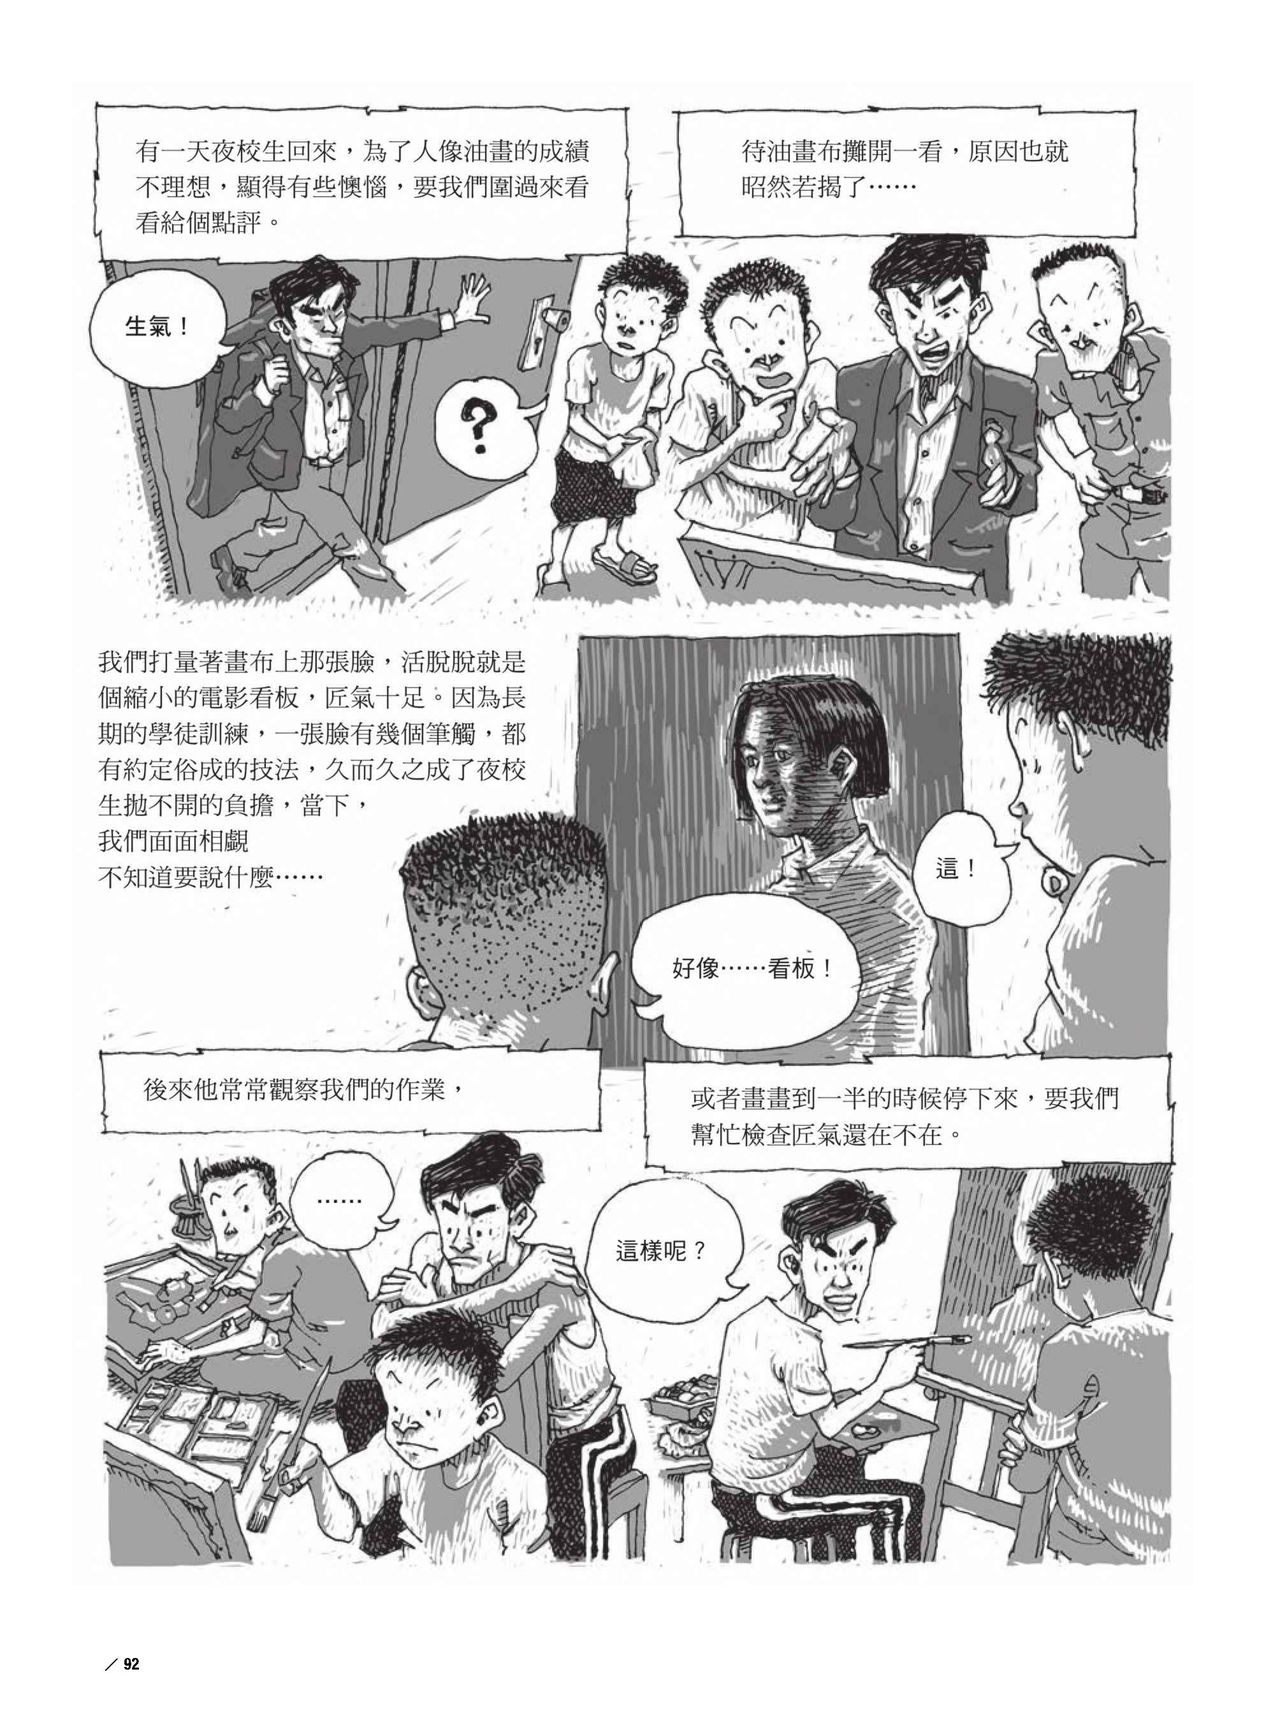 [Sean Chuang] 80’S Diary in Taiwan 2 92